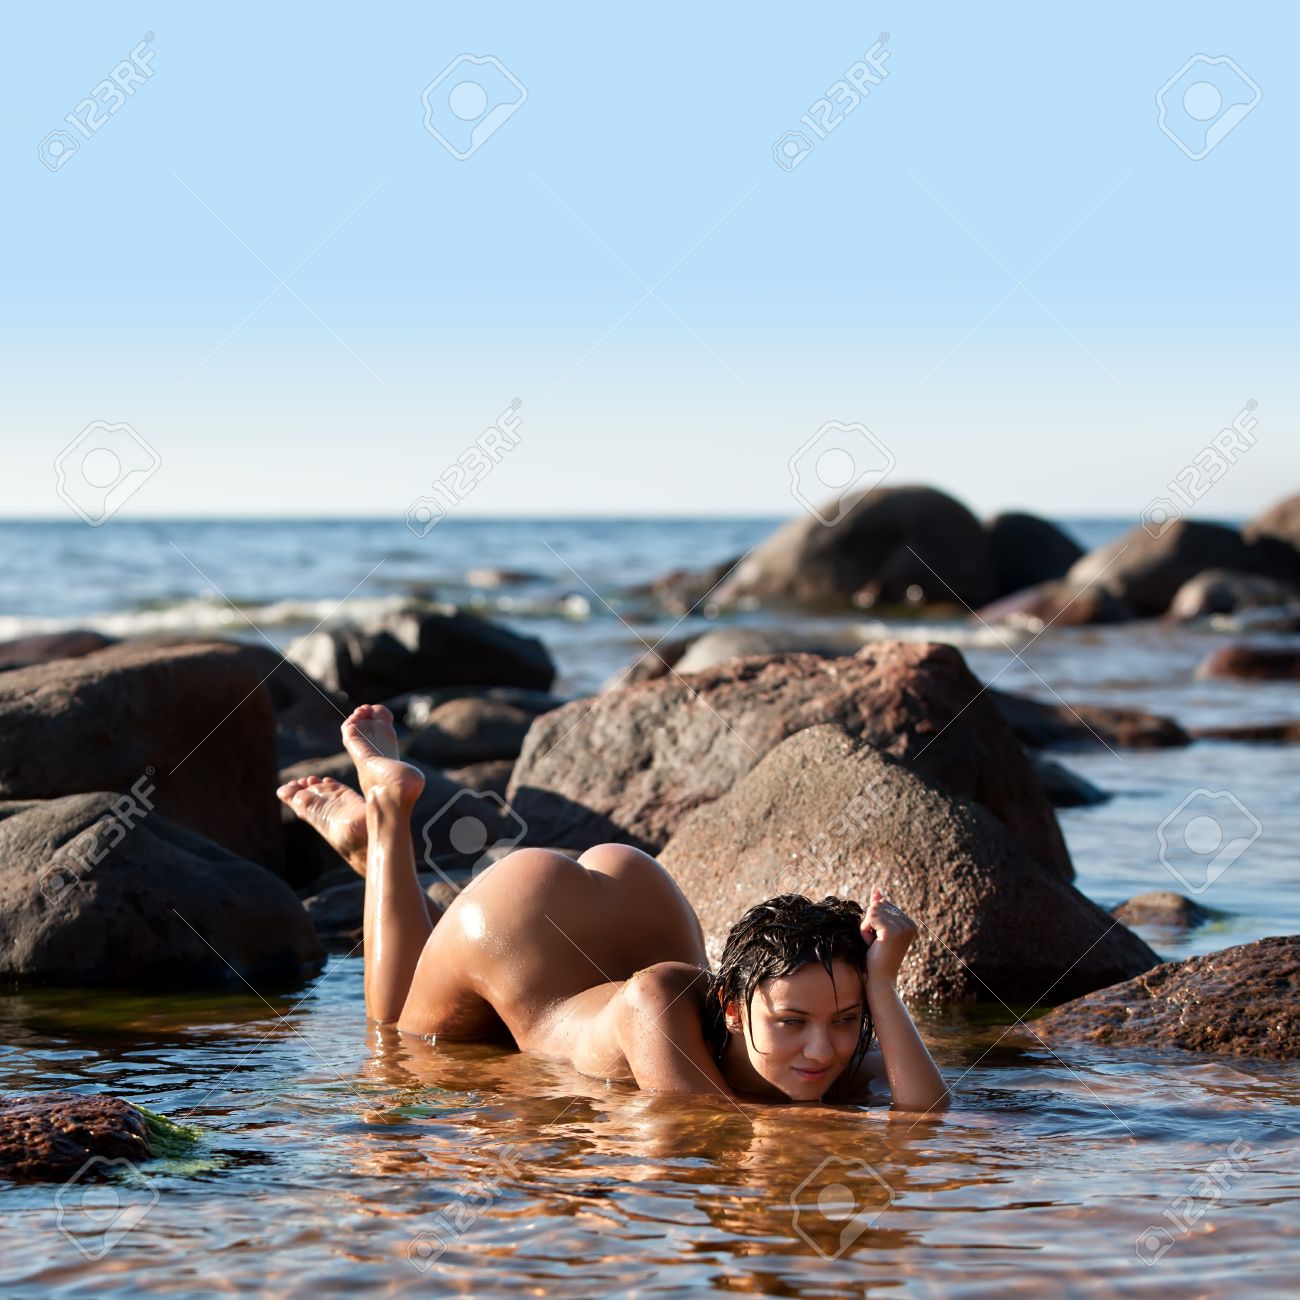 Nude women on the beach pics